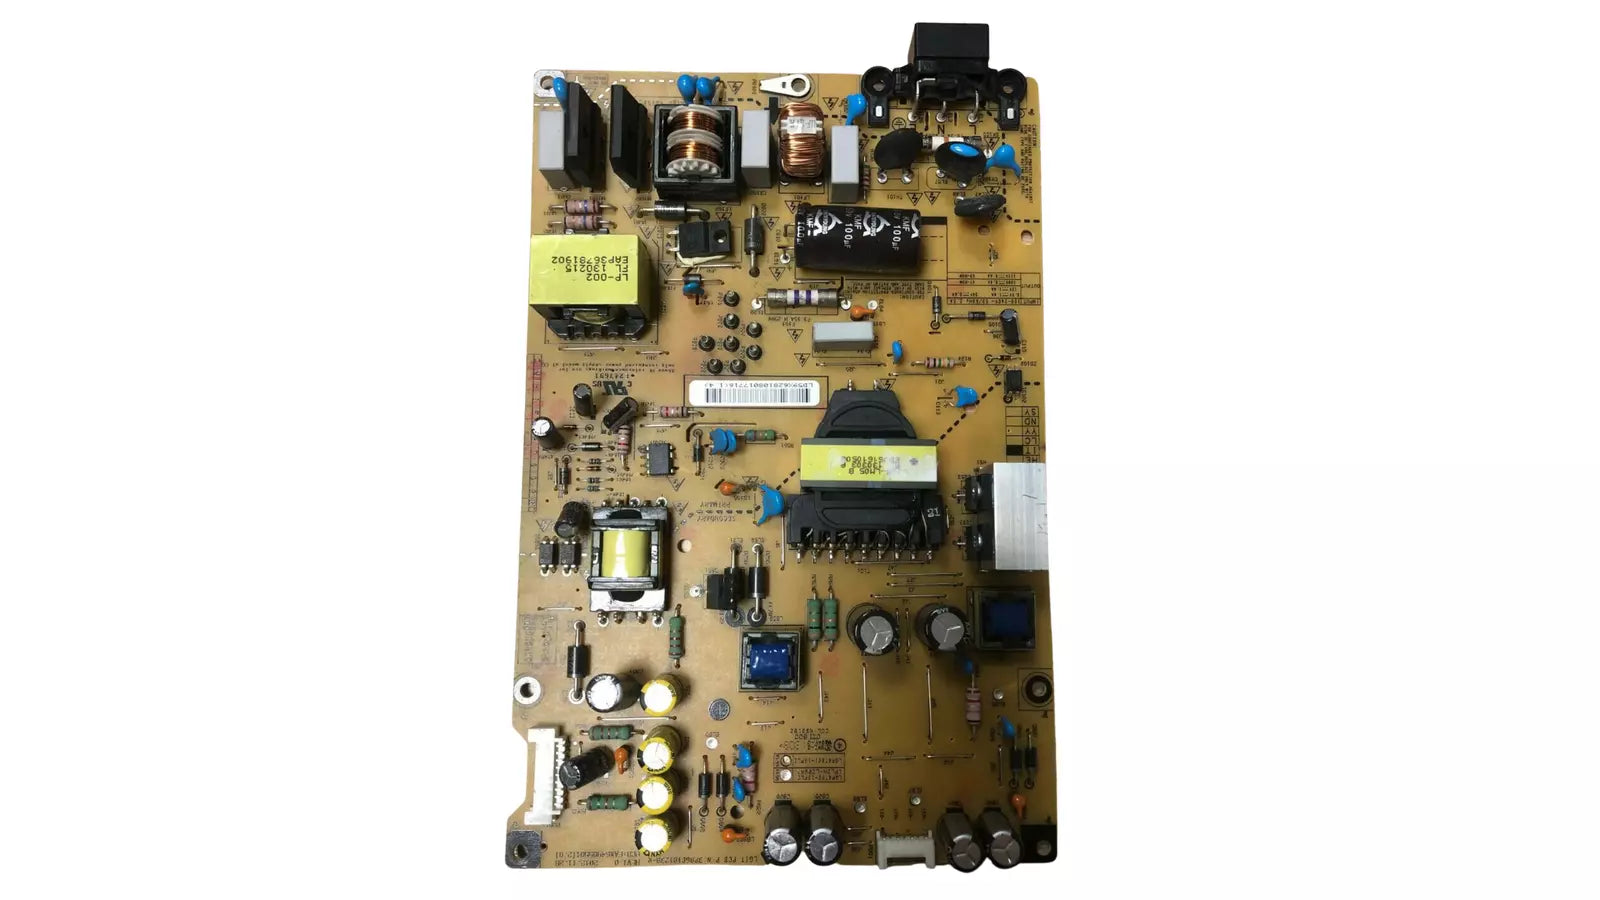 EAX64905501 (2.0) power supply LG 47LN575